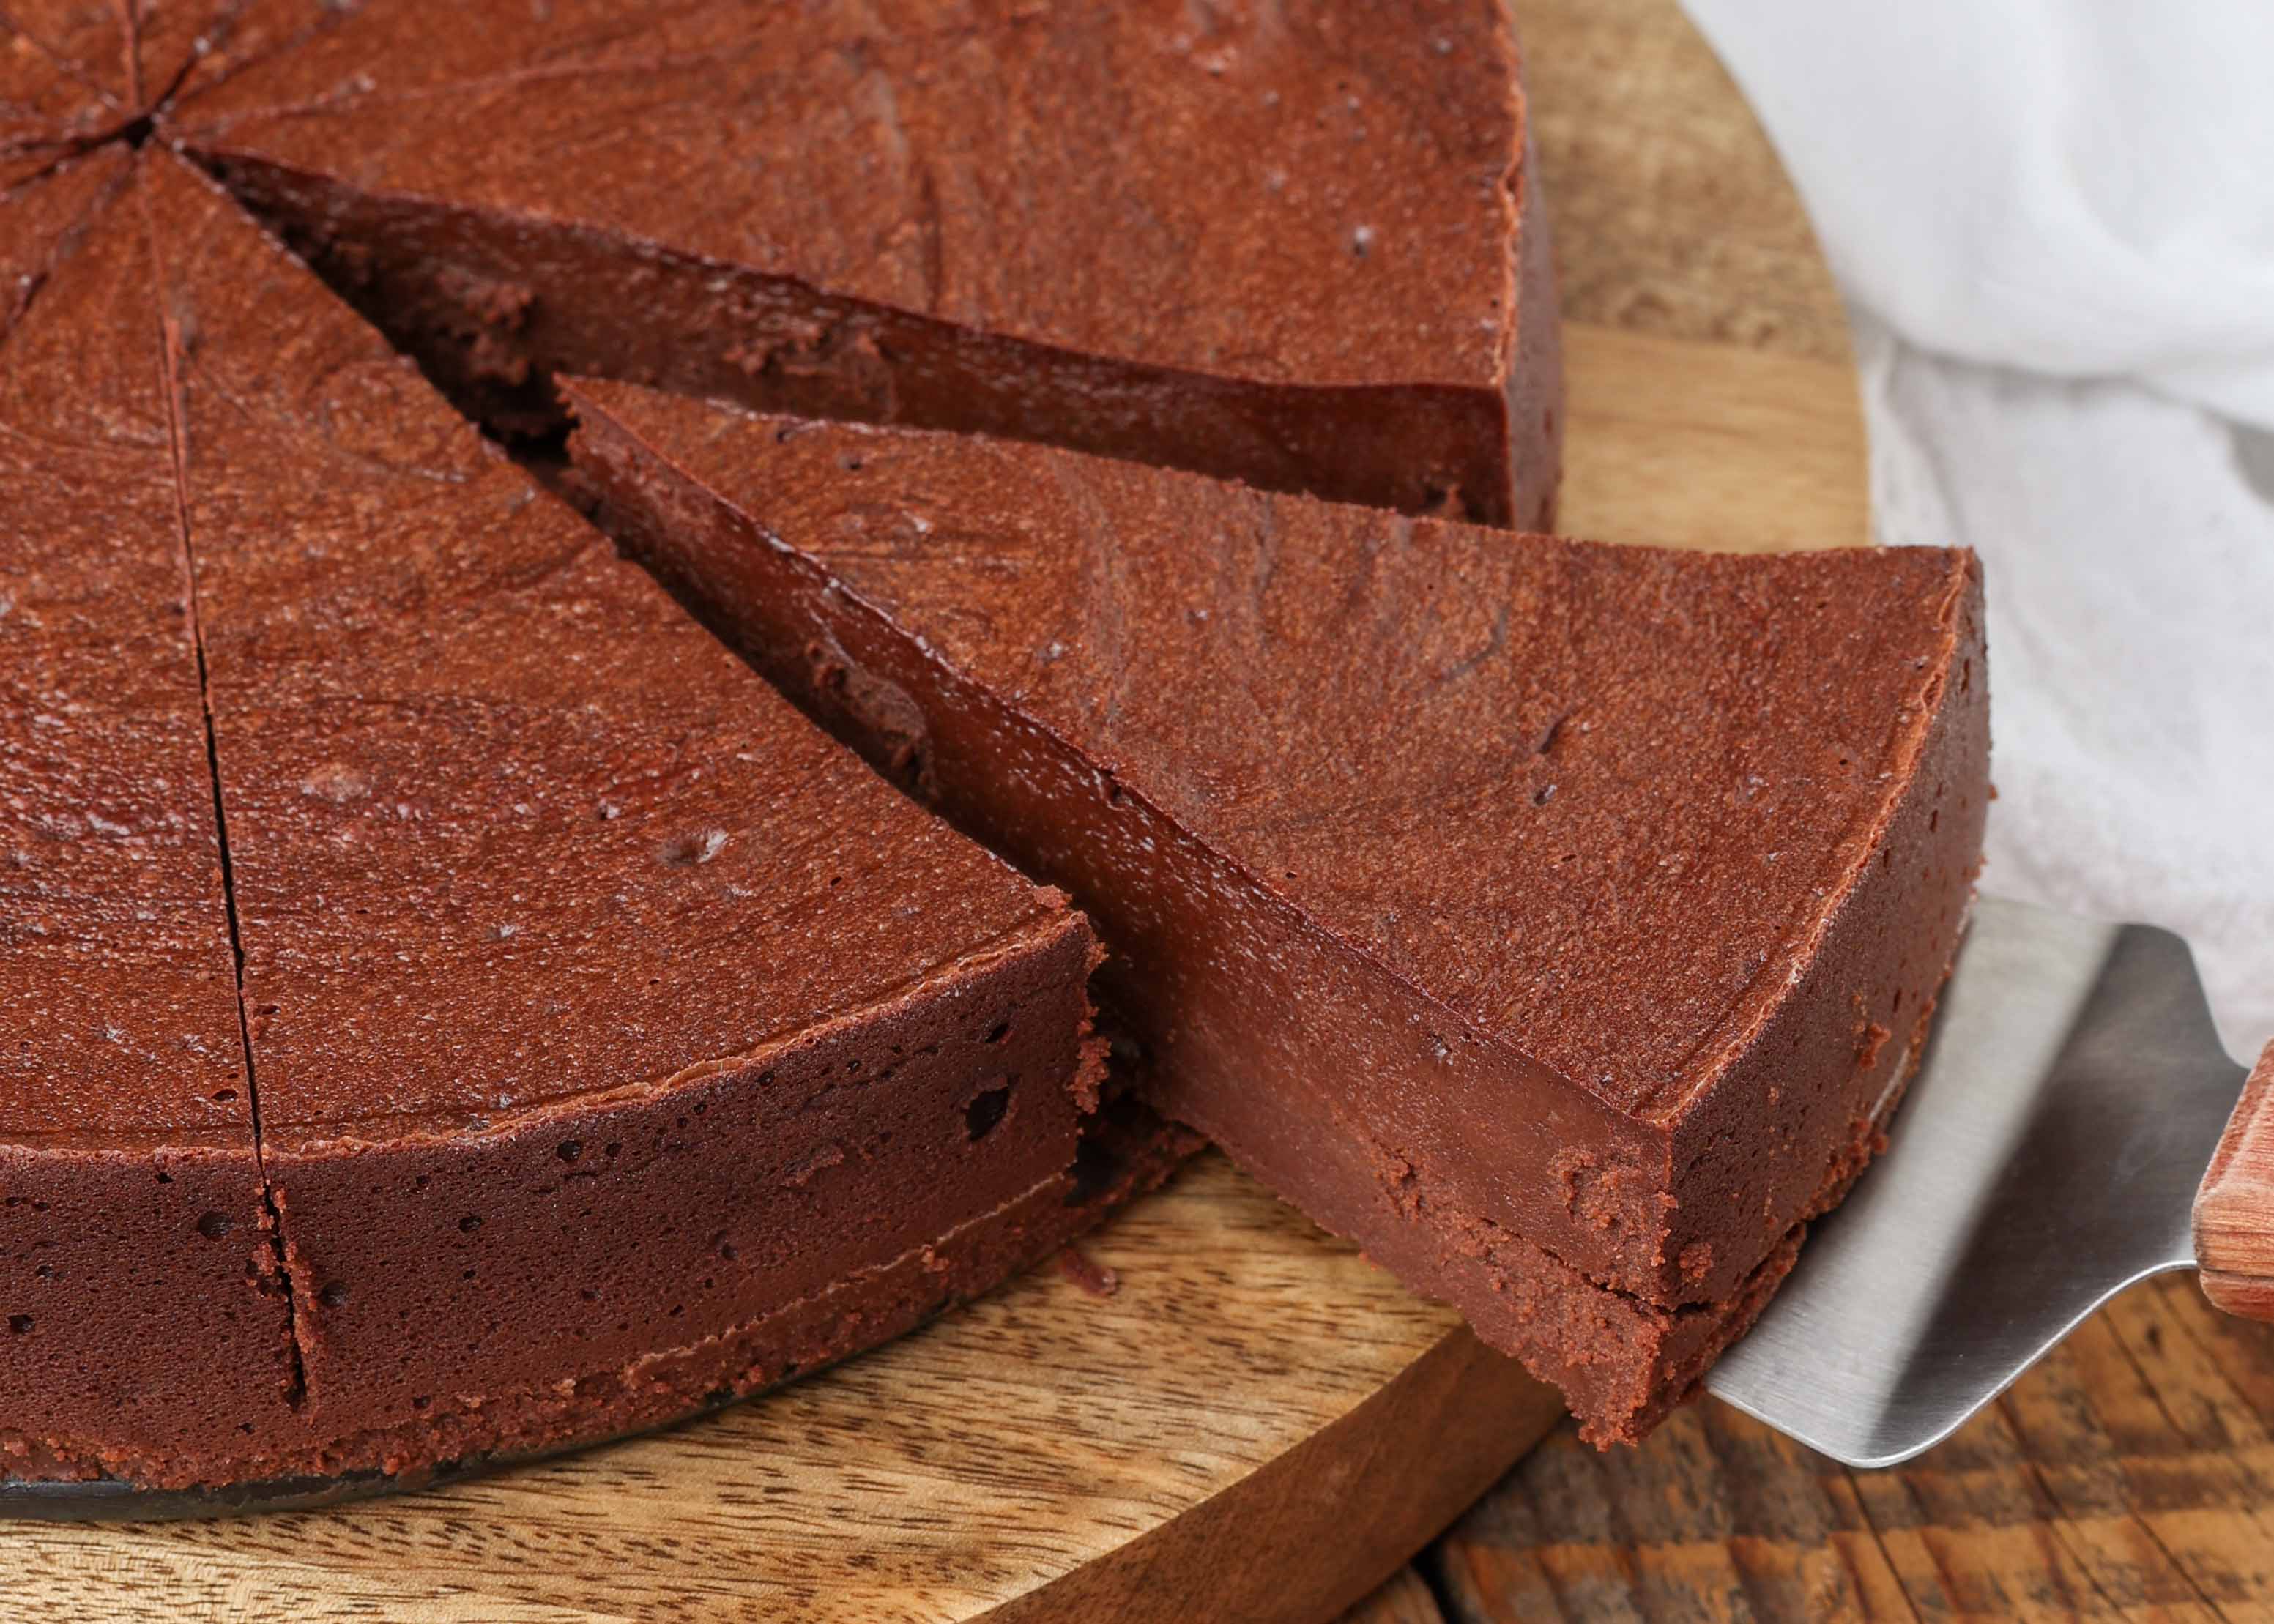 https://barefeetinthekitchen.com/wp-content/uploads/2012/02/Flourless-Chocolate-Cake-BFK-19-1-of-1.jpg